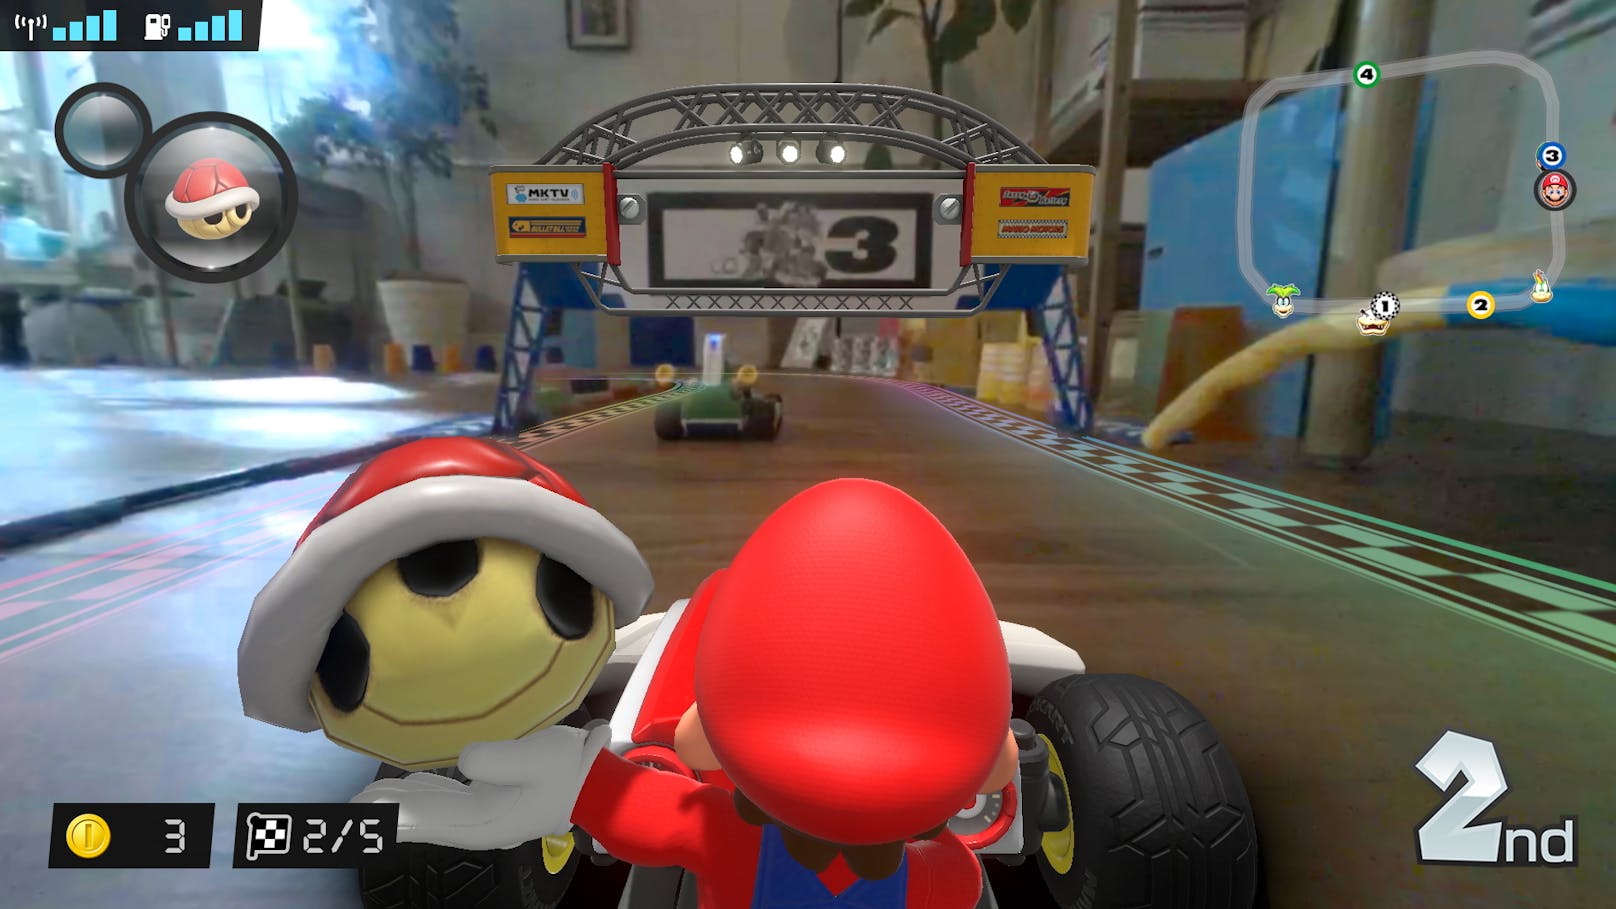 So spielt sich "Mario Kart Live: Home Circuit".